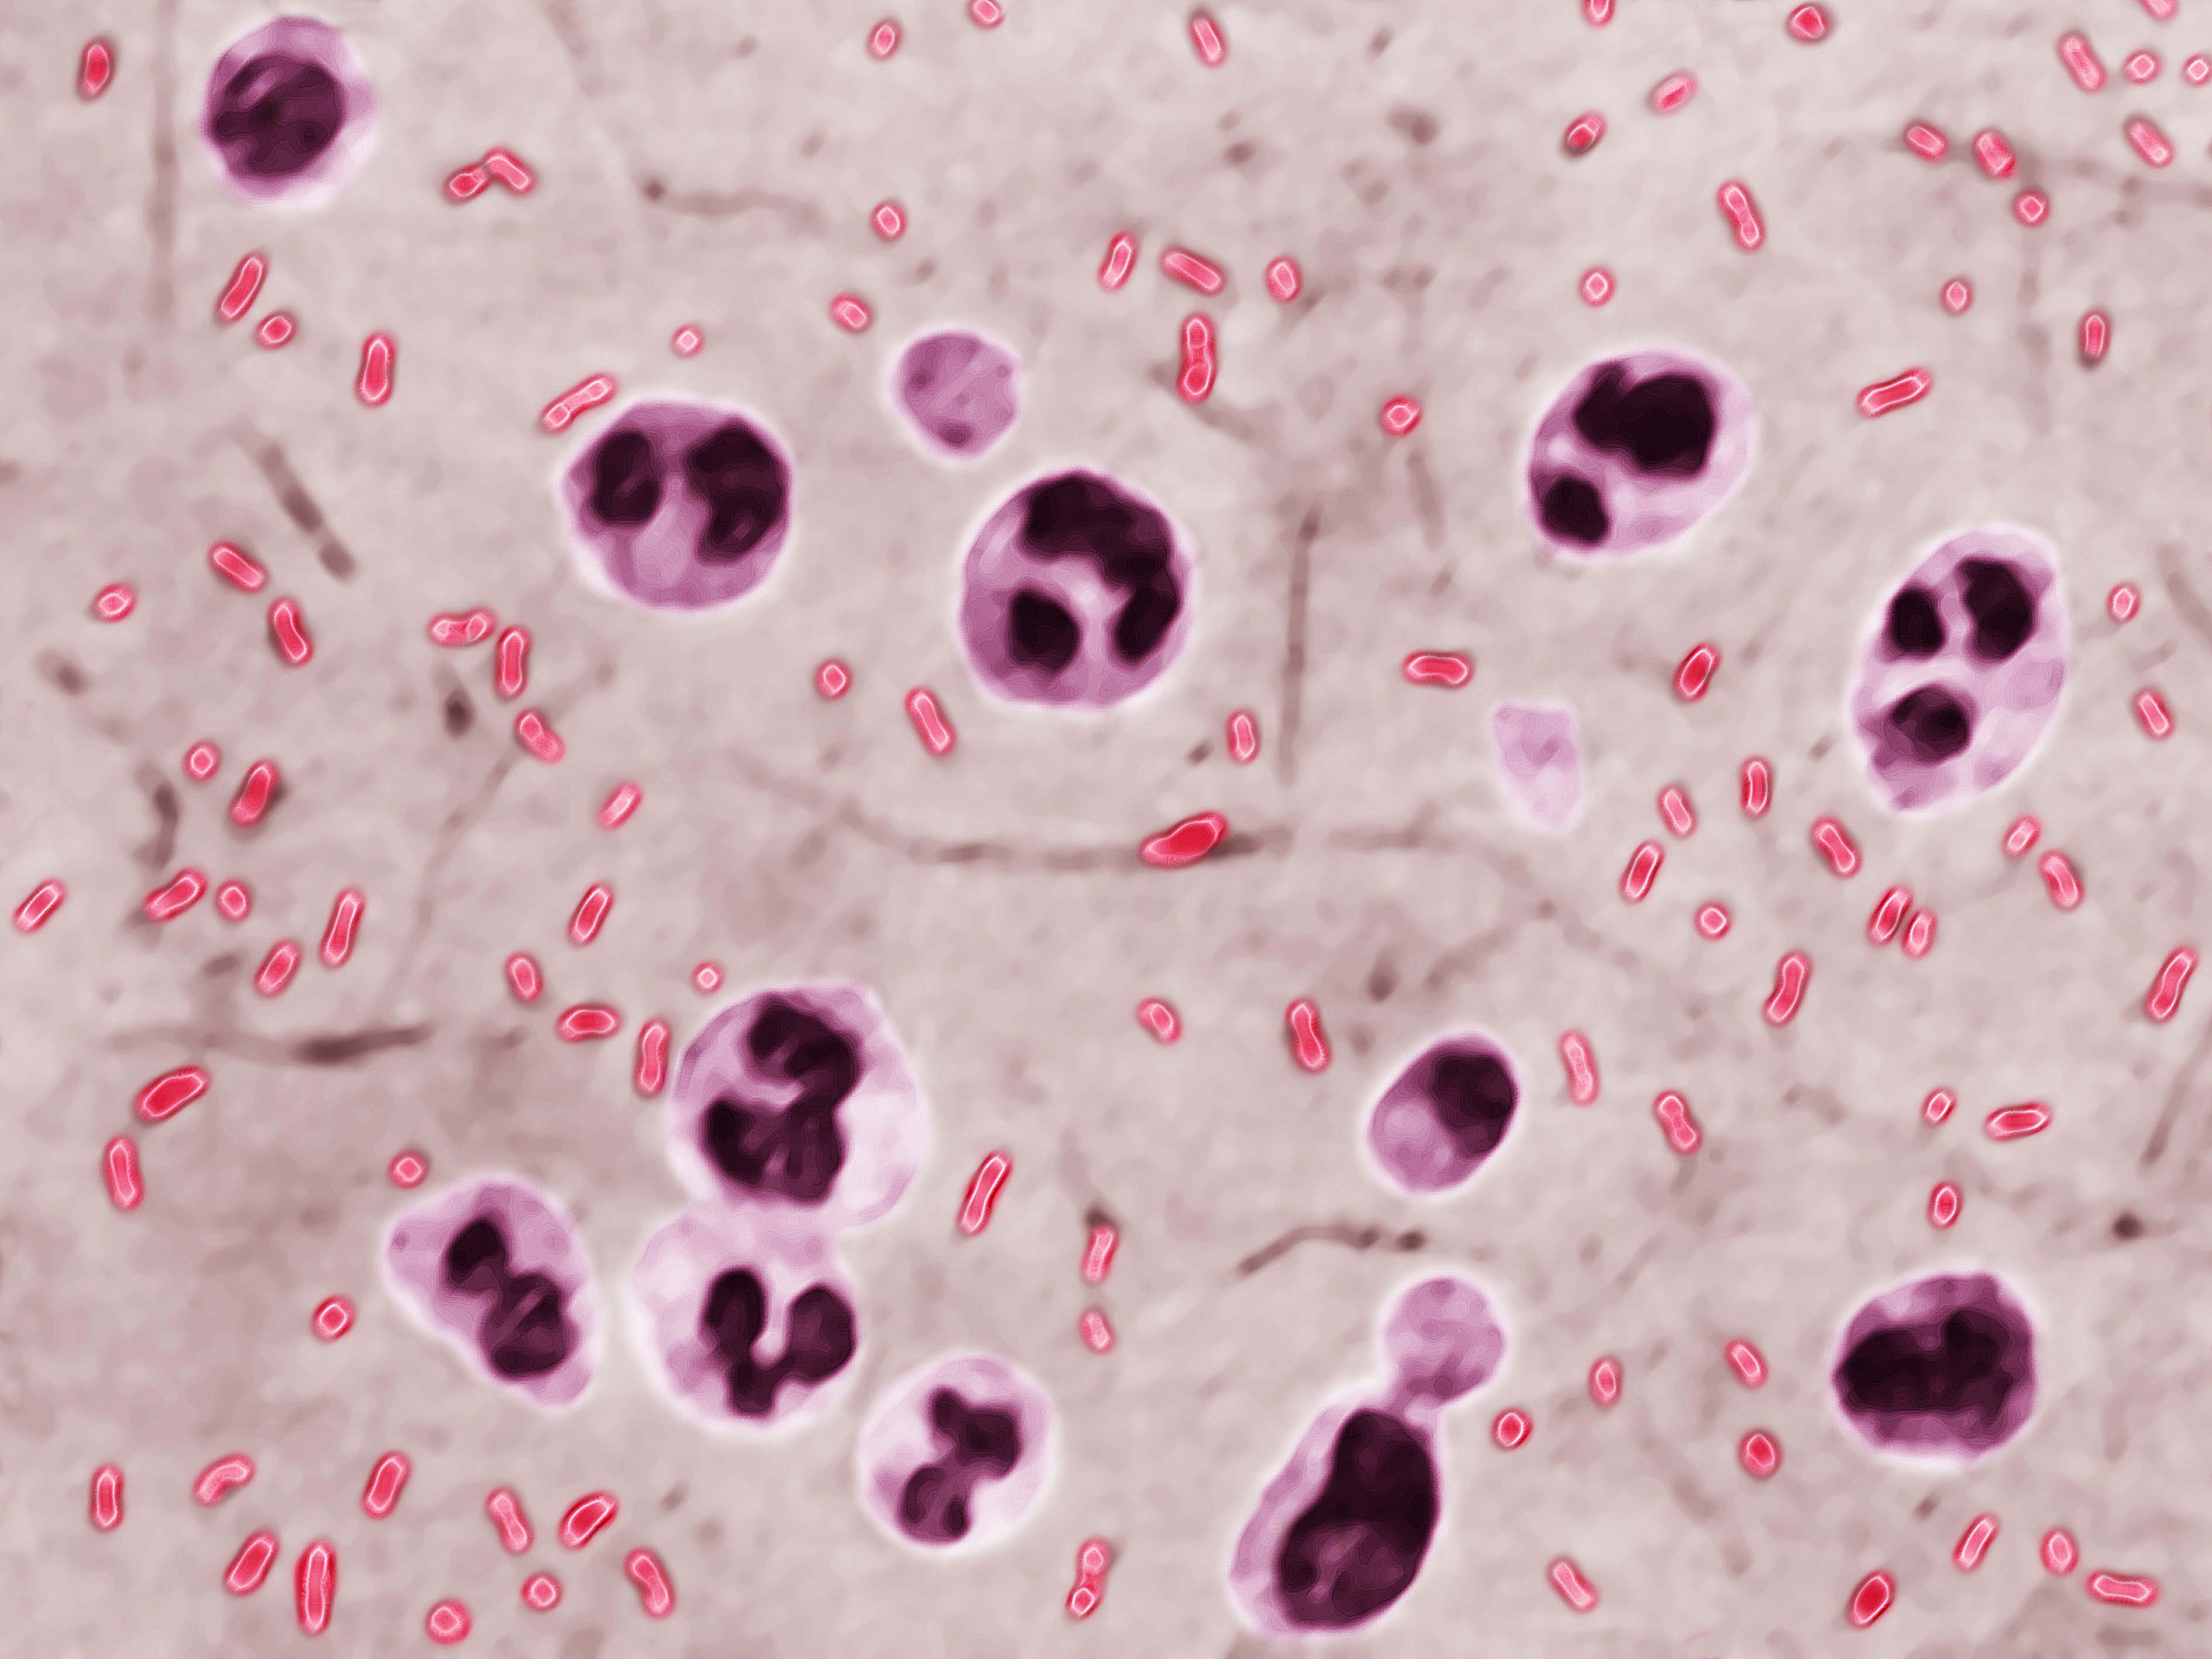 Yersinia pestis (Pasteurella pestis) is the bacterium responsible for the bubonic plague. (Getty Images)